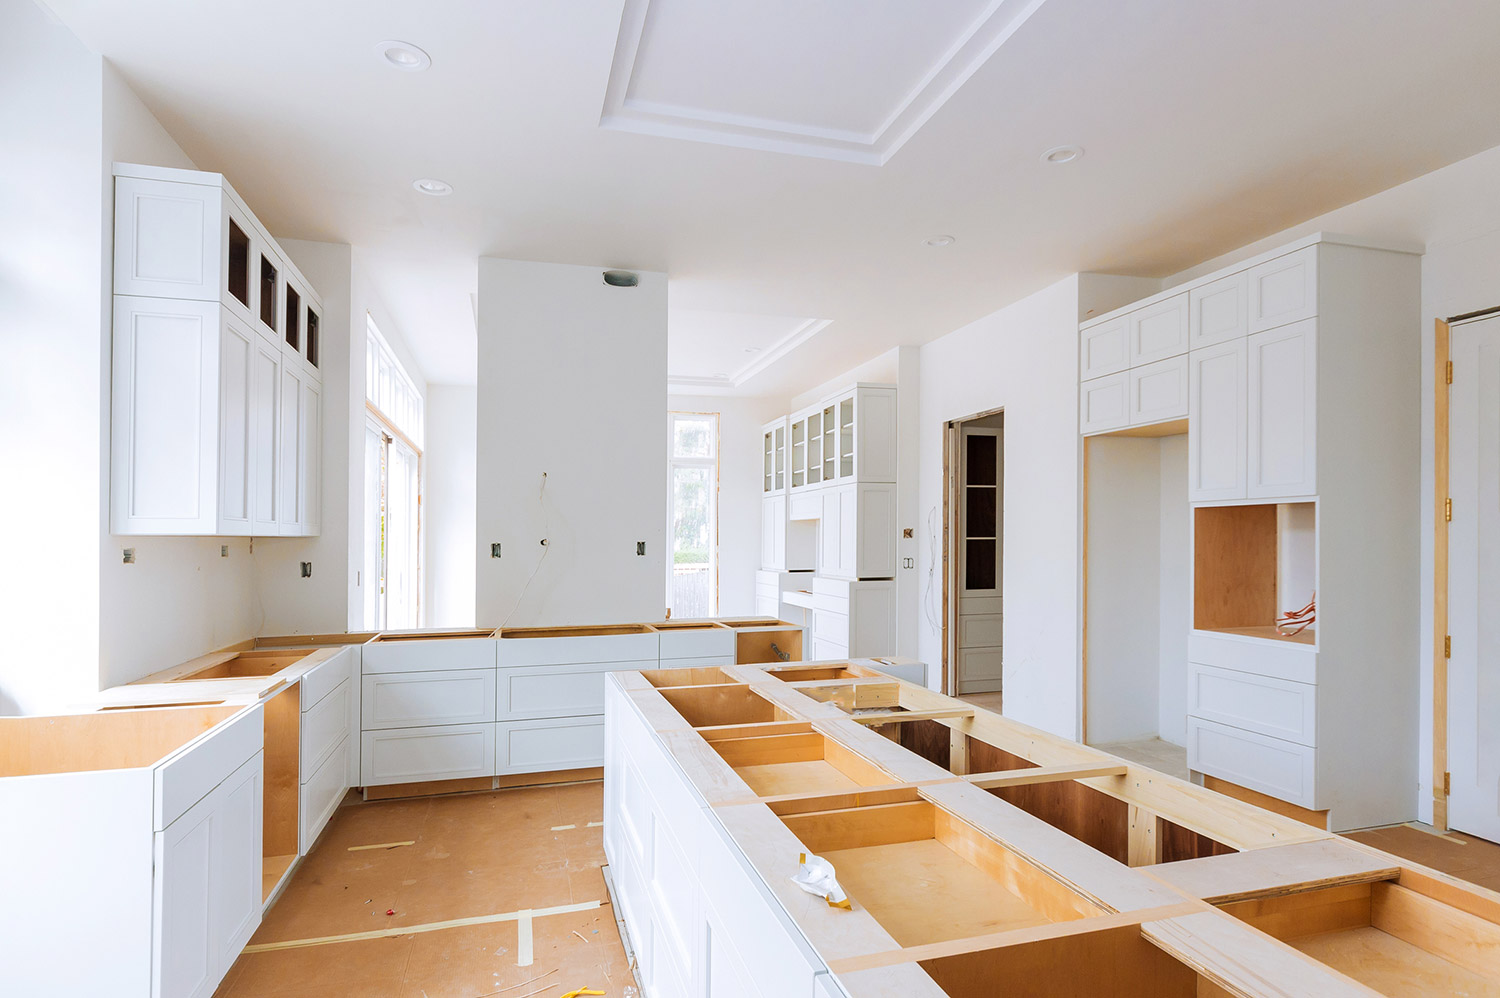 Custom Kitchens - Kitchen Remodeling Tips